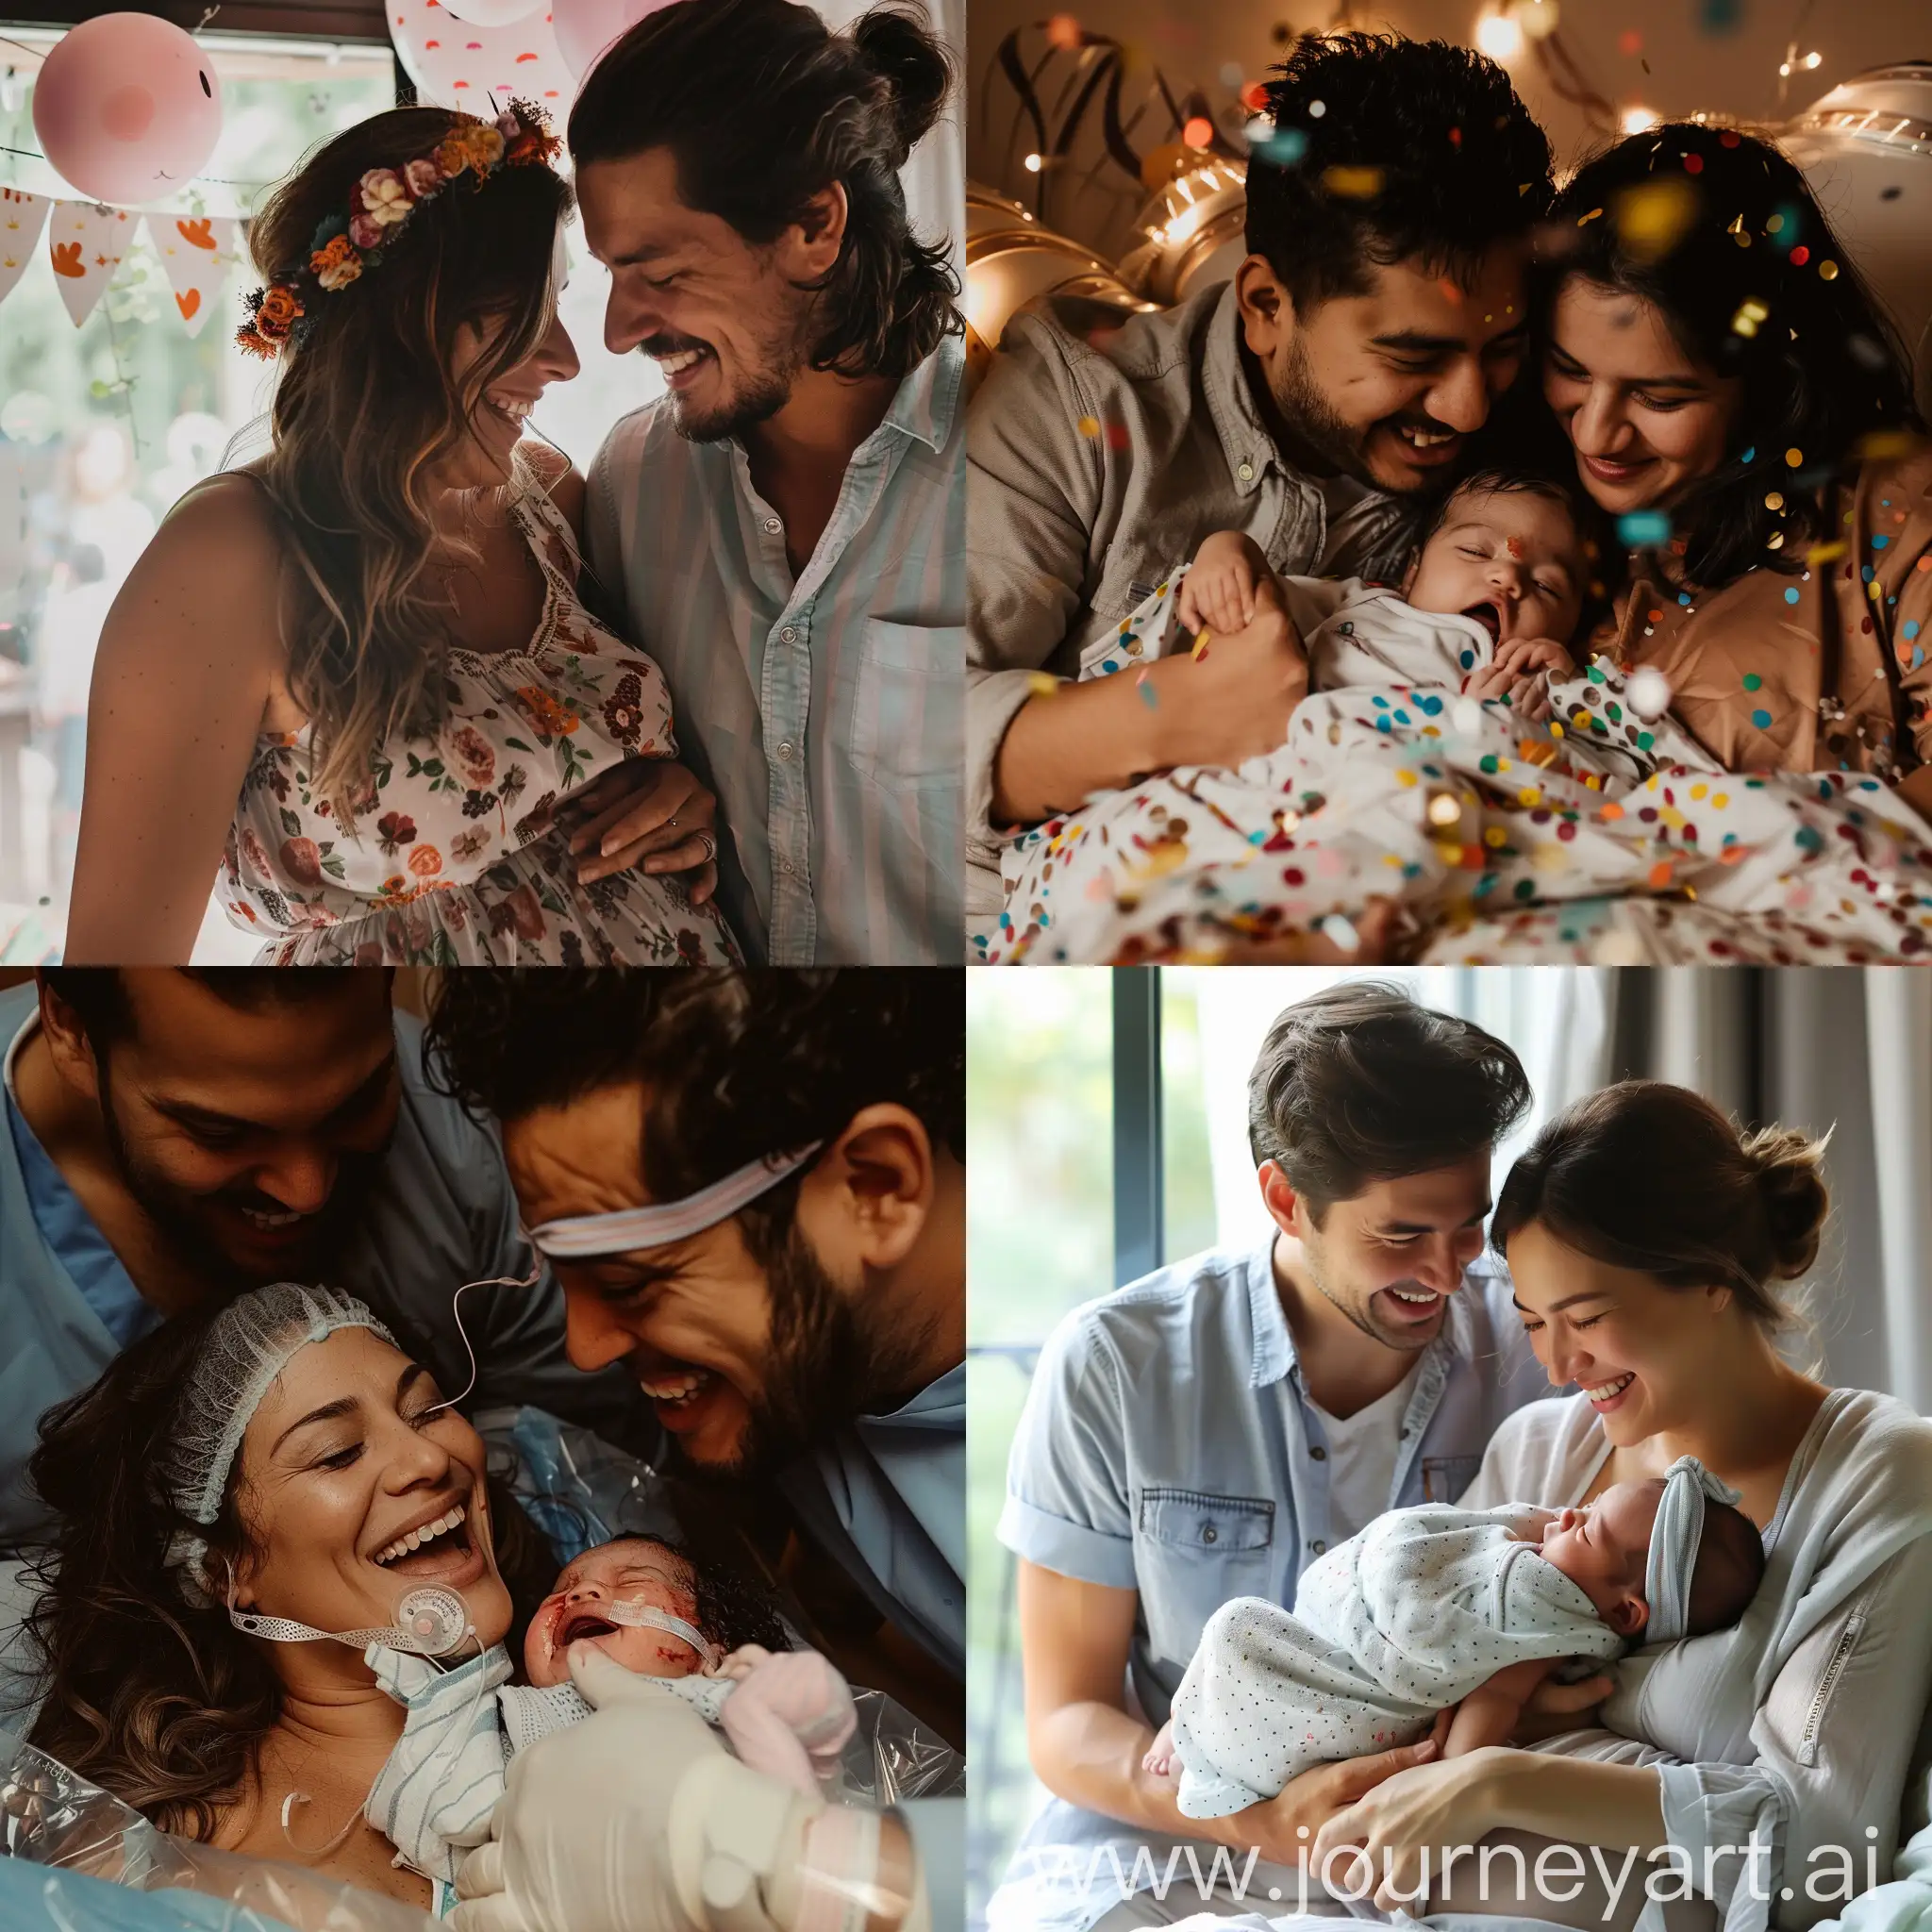 Joyful-Family-Celebrating-Newborn-Arrival-with-Mom-and-Dad